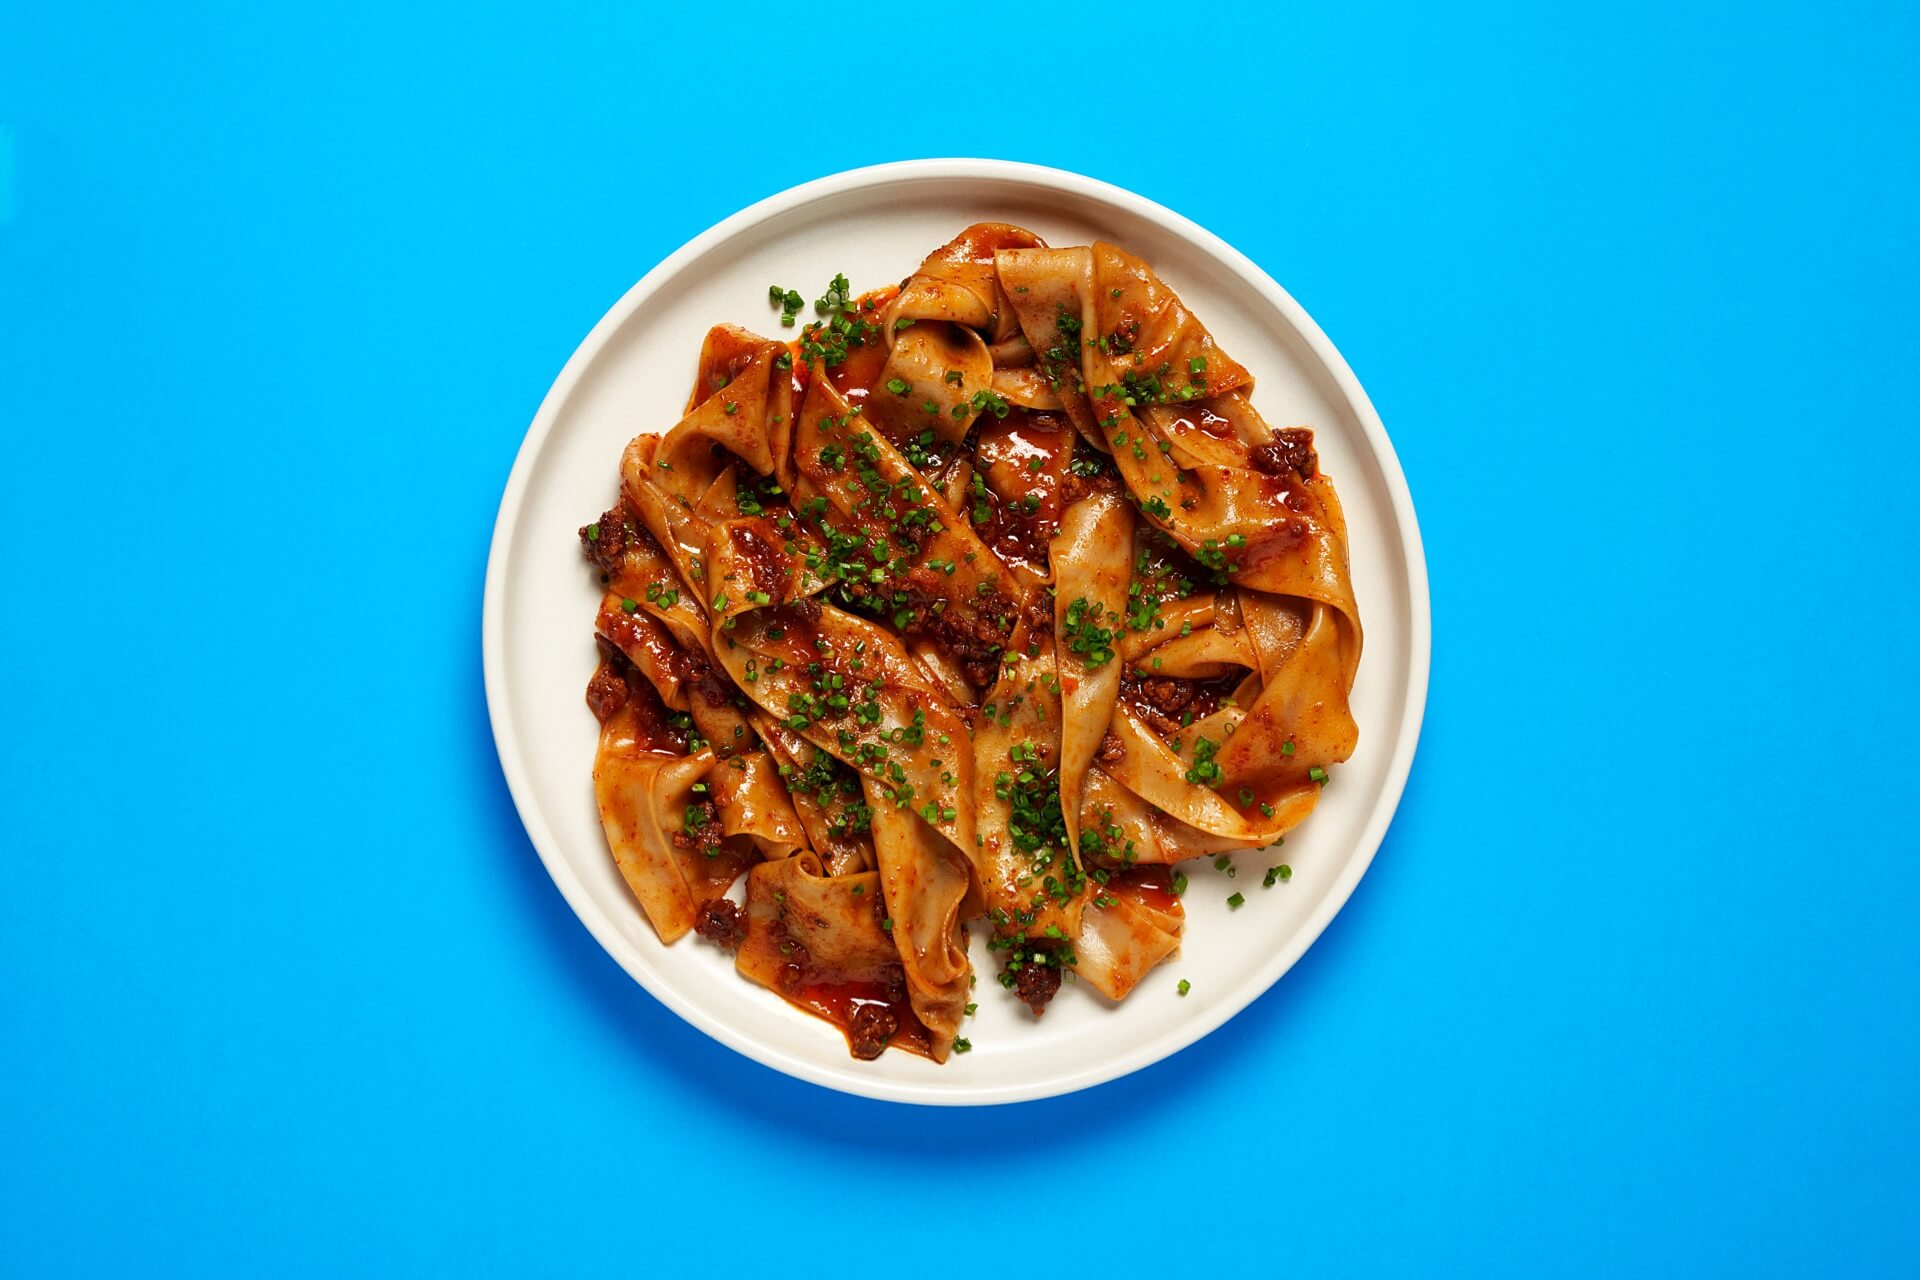 Flat noodles with chili & doenjang pork — Tokki